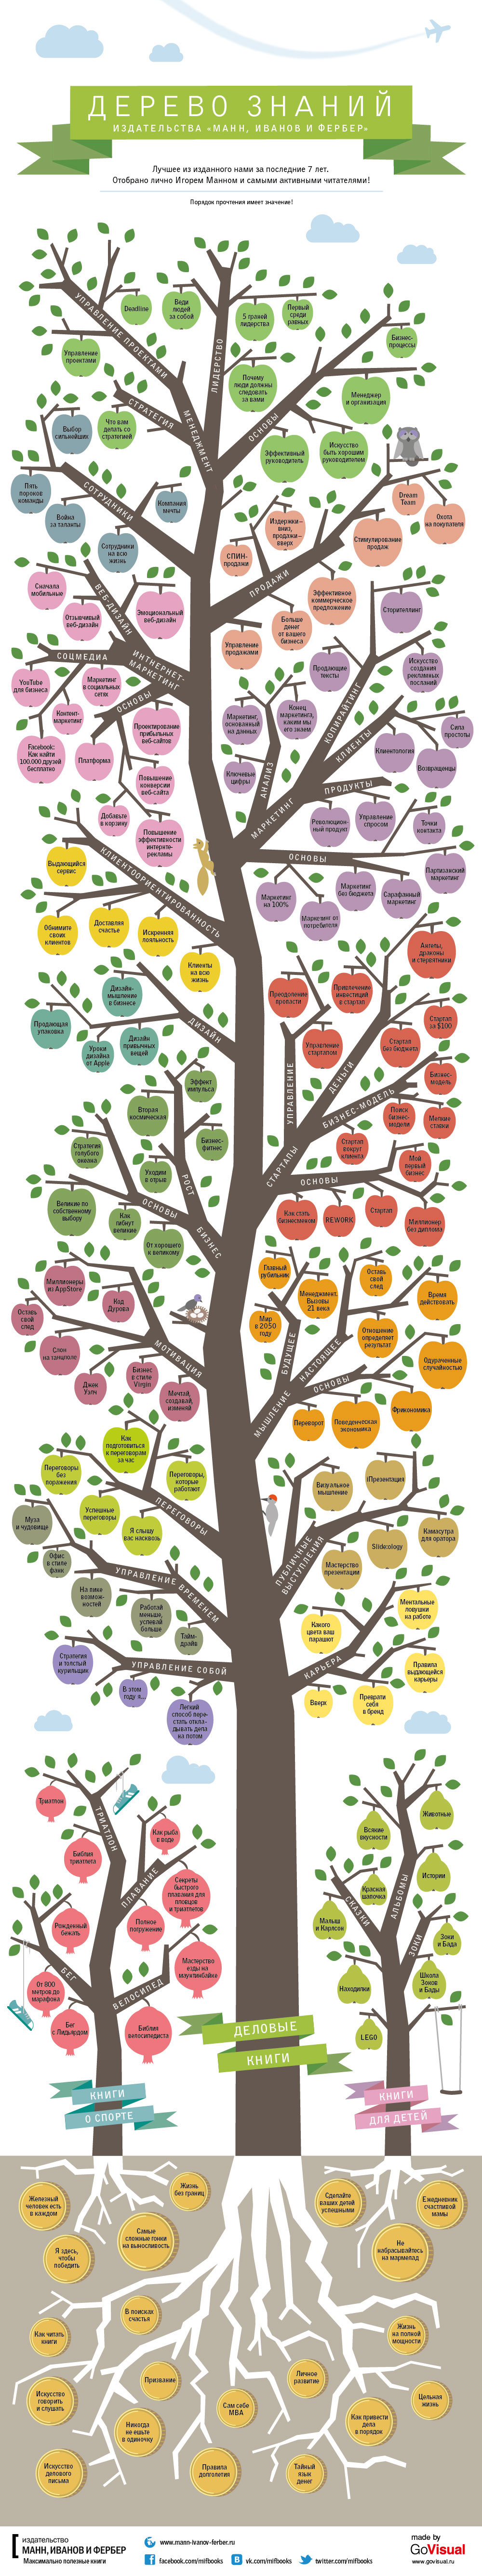 info infographic vector Tree  apple book